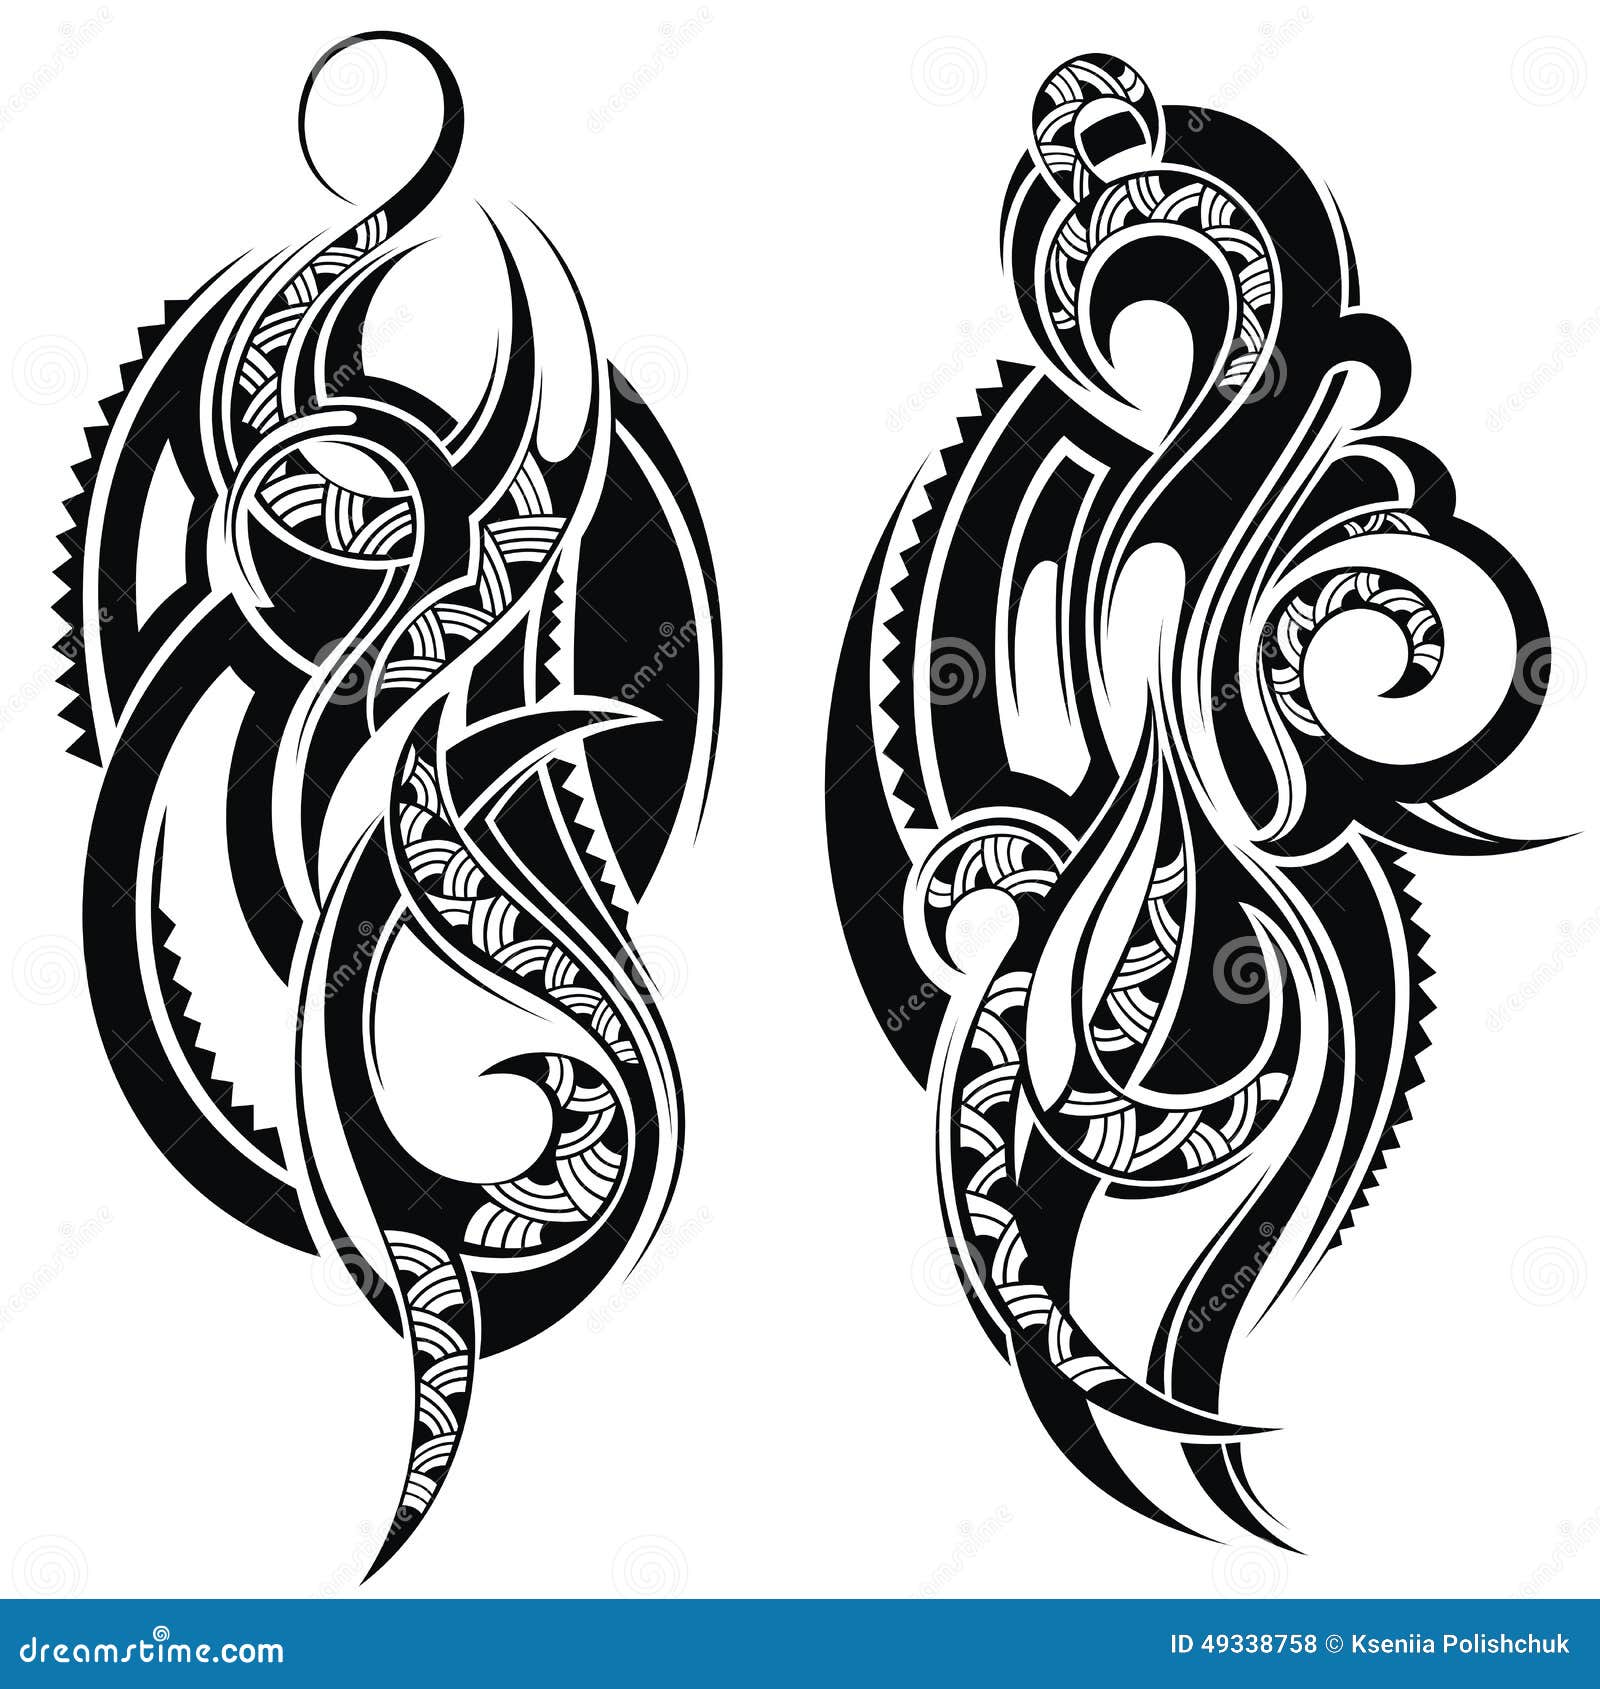 Tattoo design elements stock vector. Illustration of spiral - 49338758